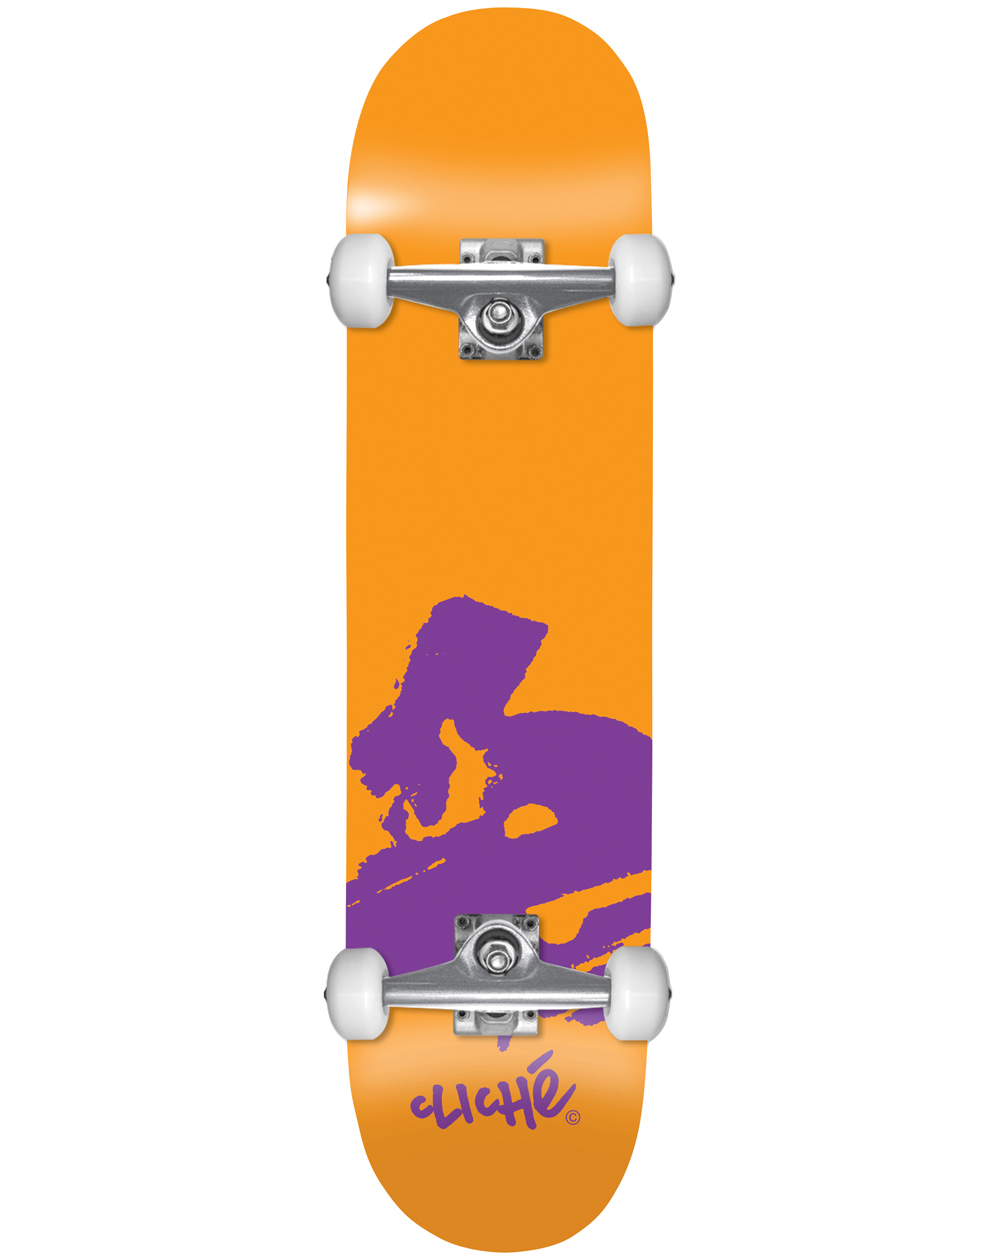 Cliché Skateboard Complète Europe 7.875" Orange